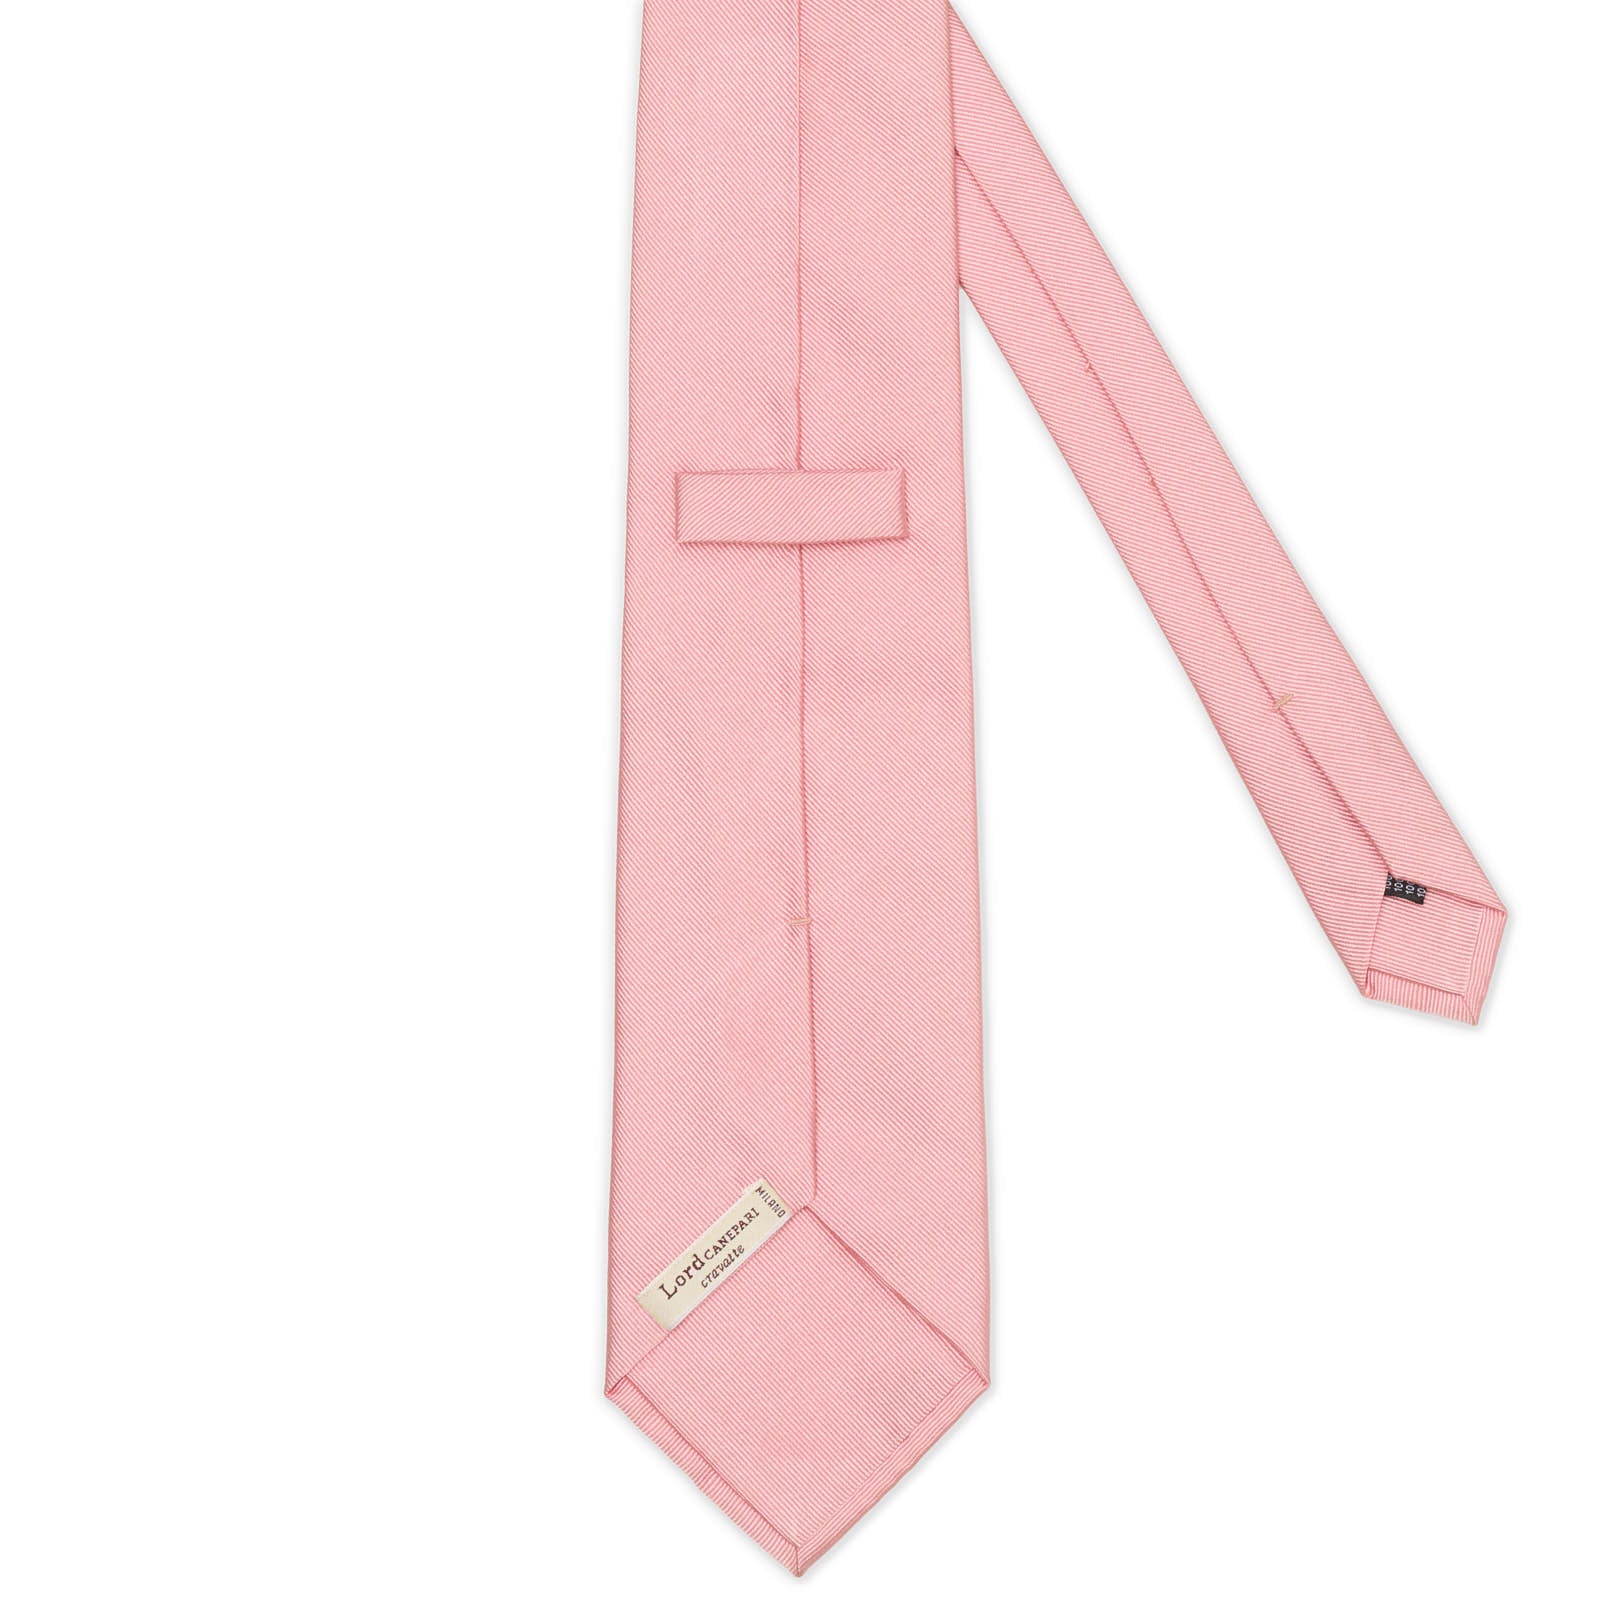 LORD CANEPARI Pink Diagonal Striped Silk Tie NEW